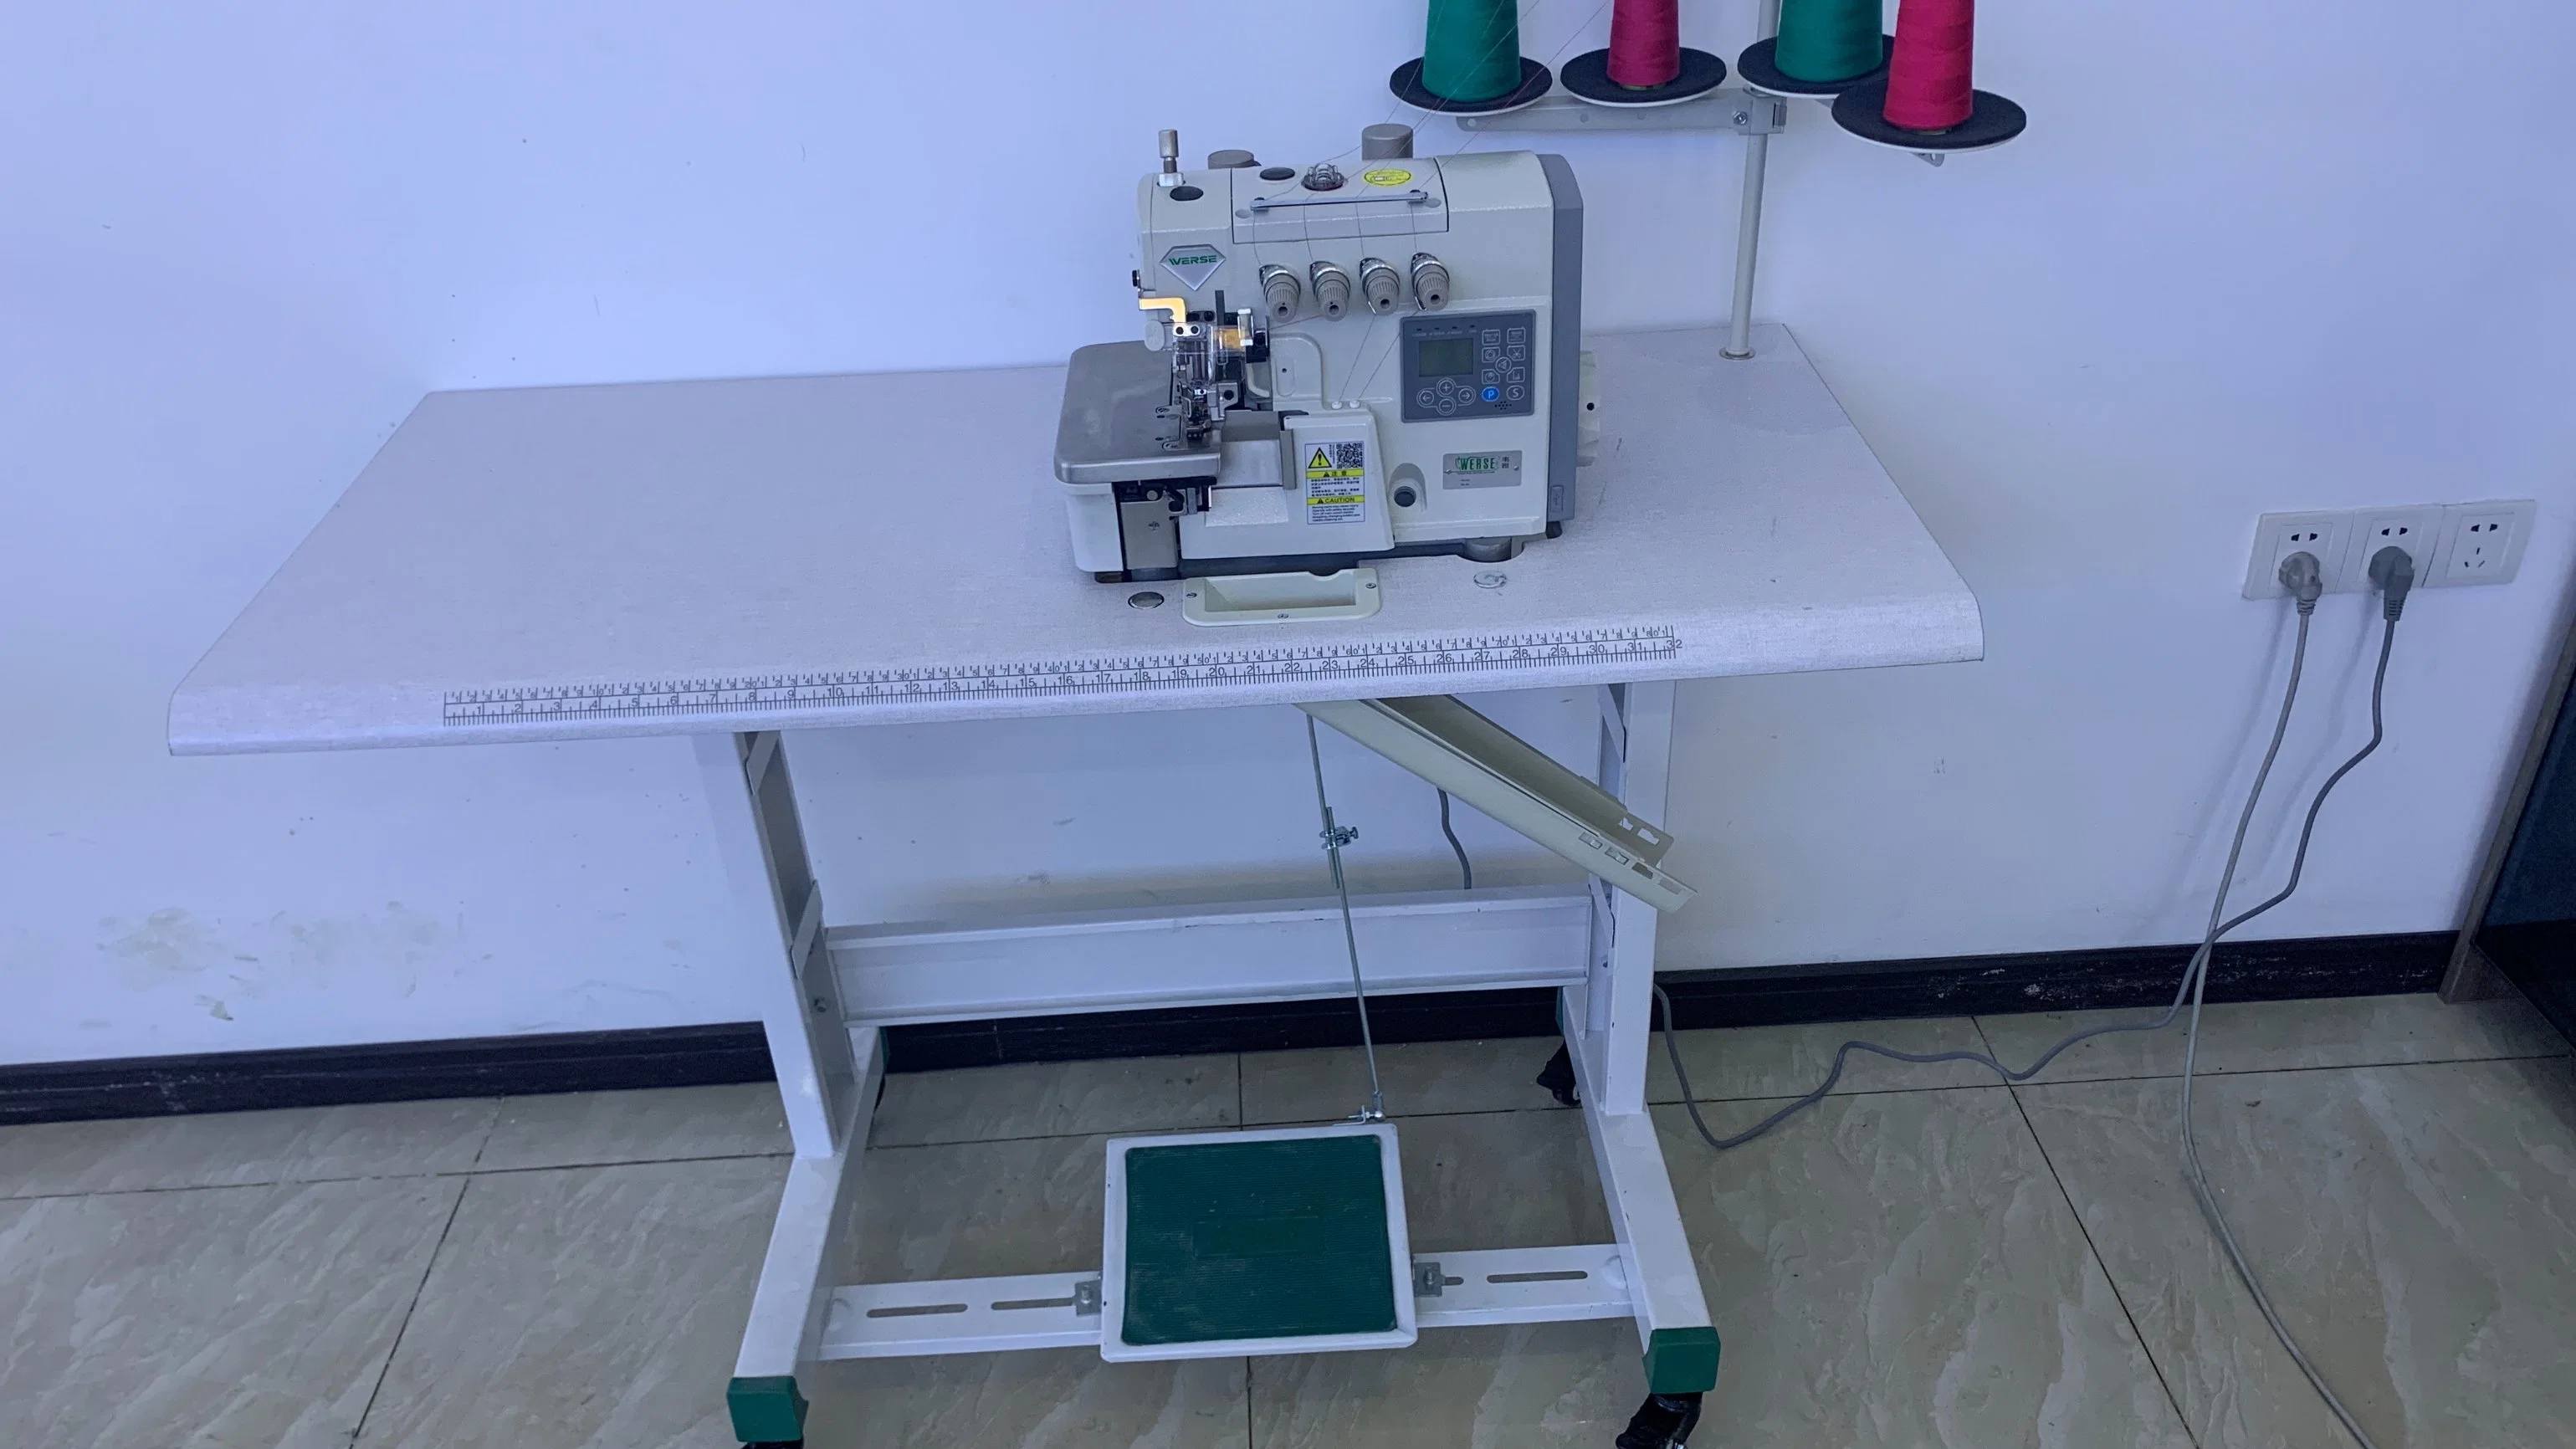 Wr-900-Utd Werse Automatic High-Speed Computer Overlock Industrial Sewing Machine